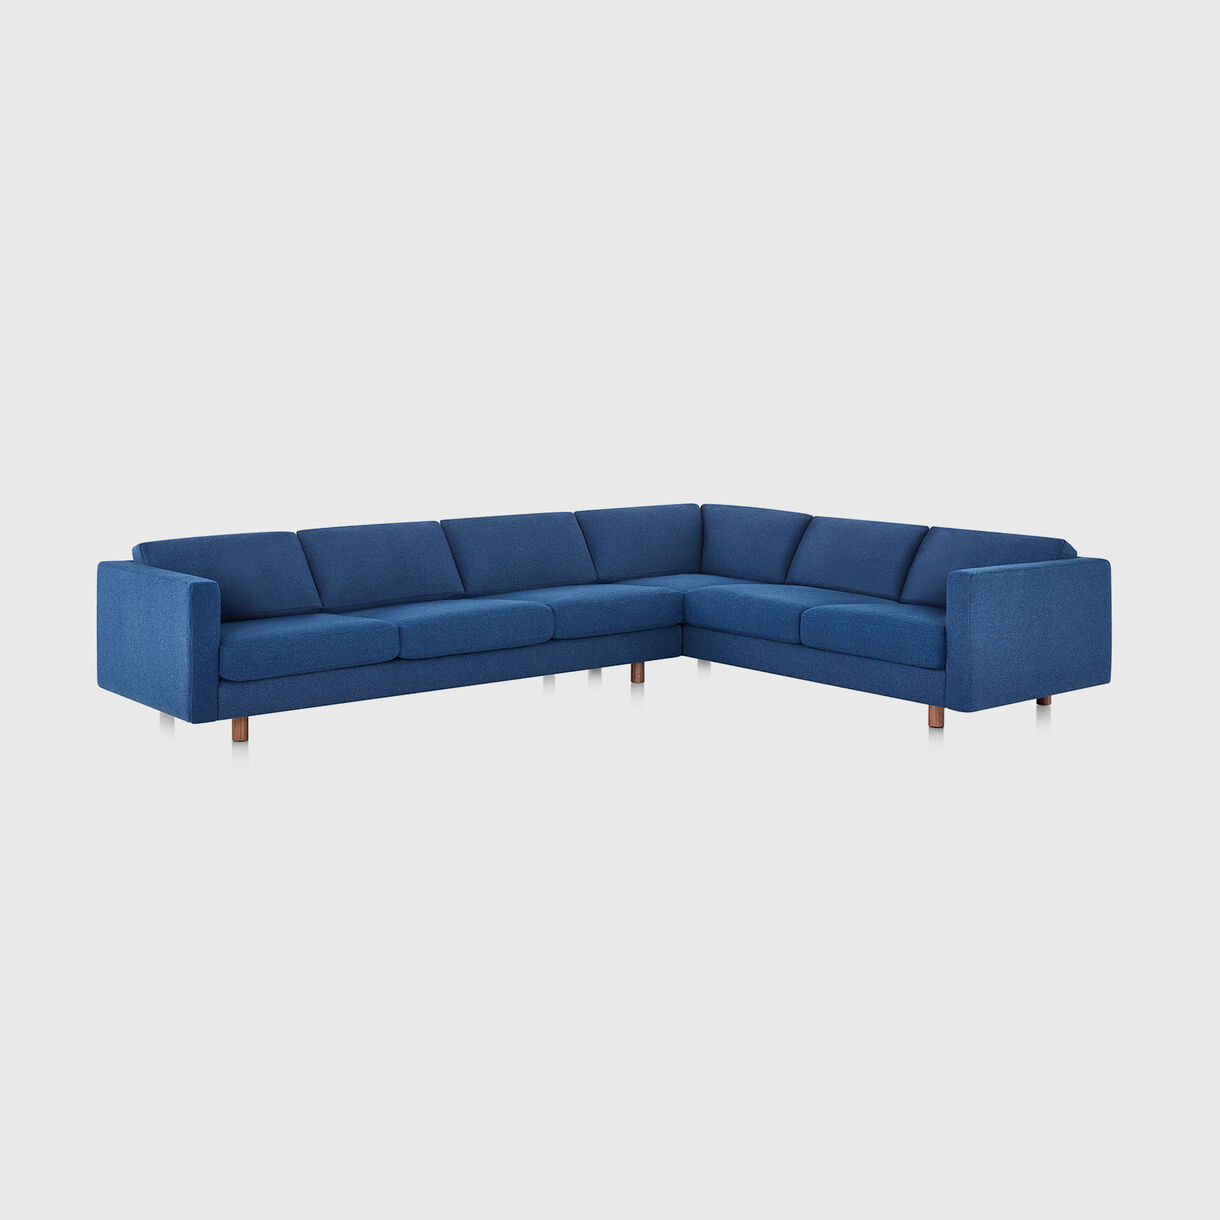 Lispenard Sectional Sofa, Right Configuration, Superweave Marine